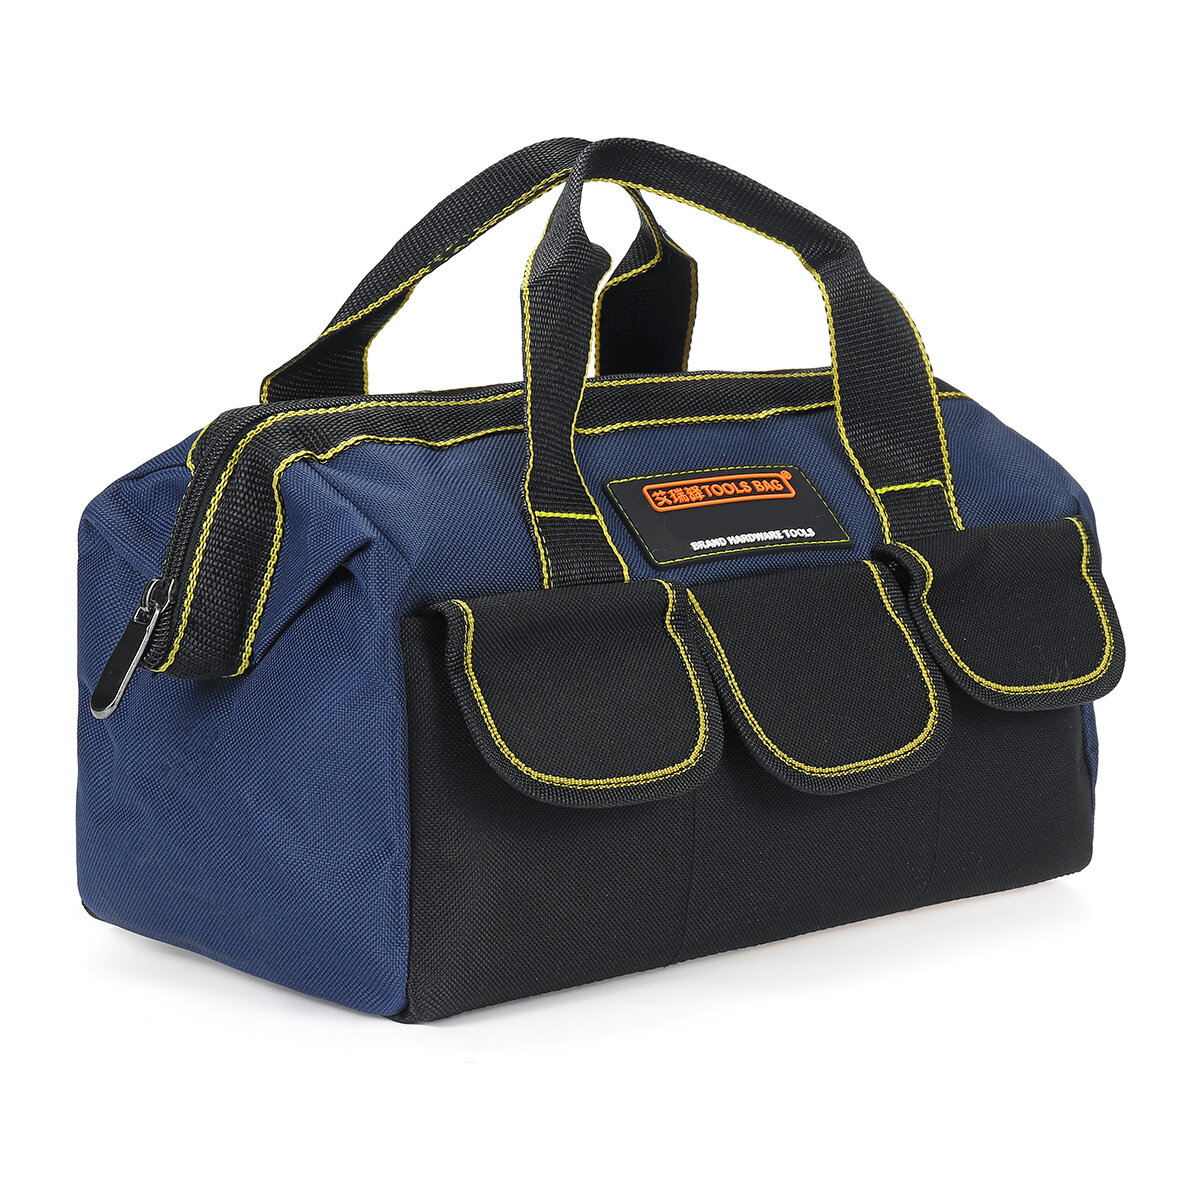 13inch Handbag Fishing Carry Bag Waterproof Canvas Storage Bag